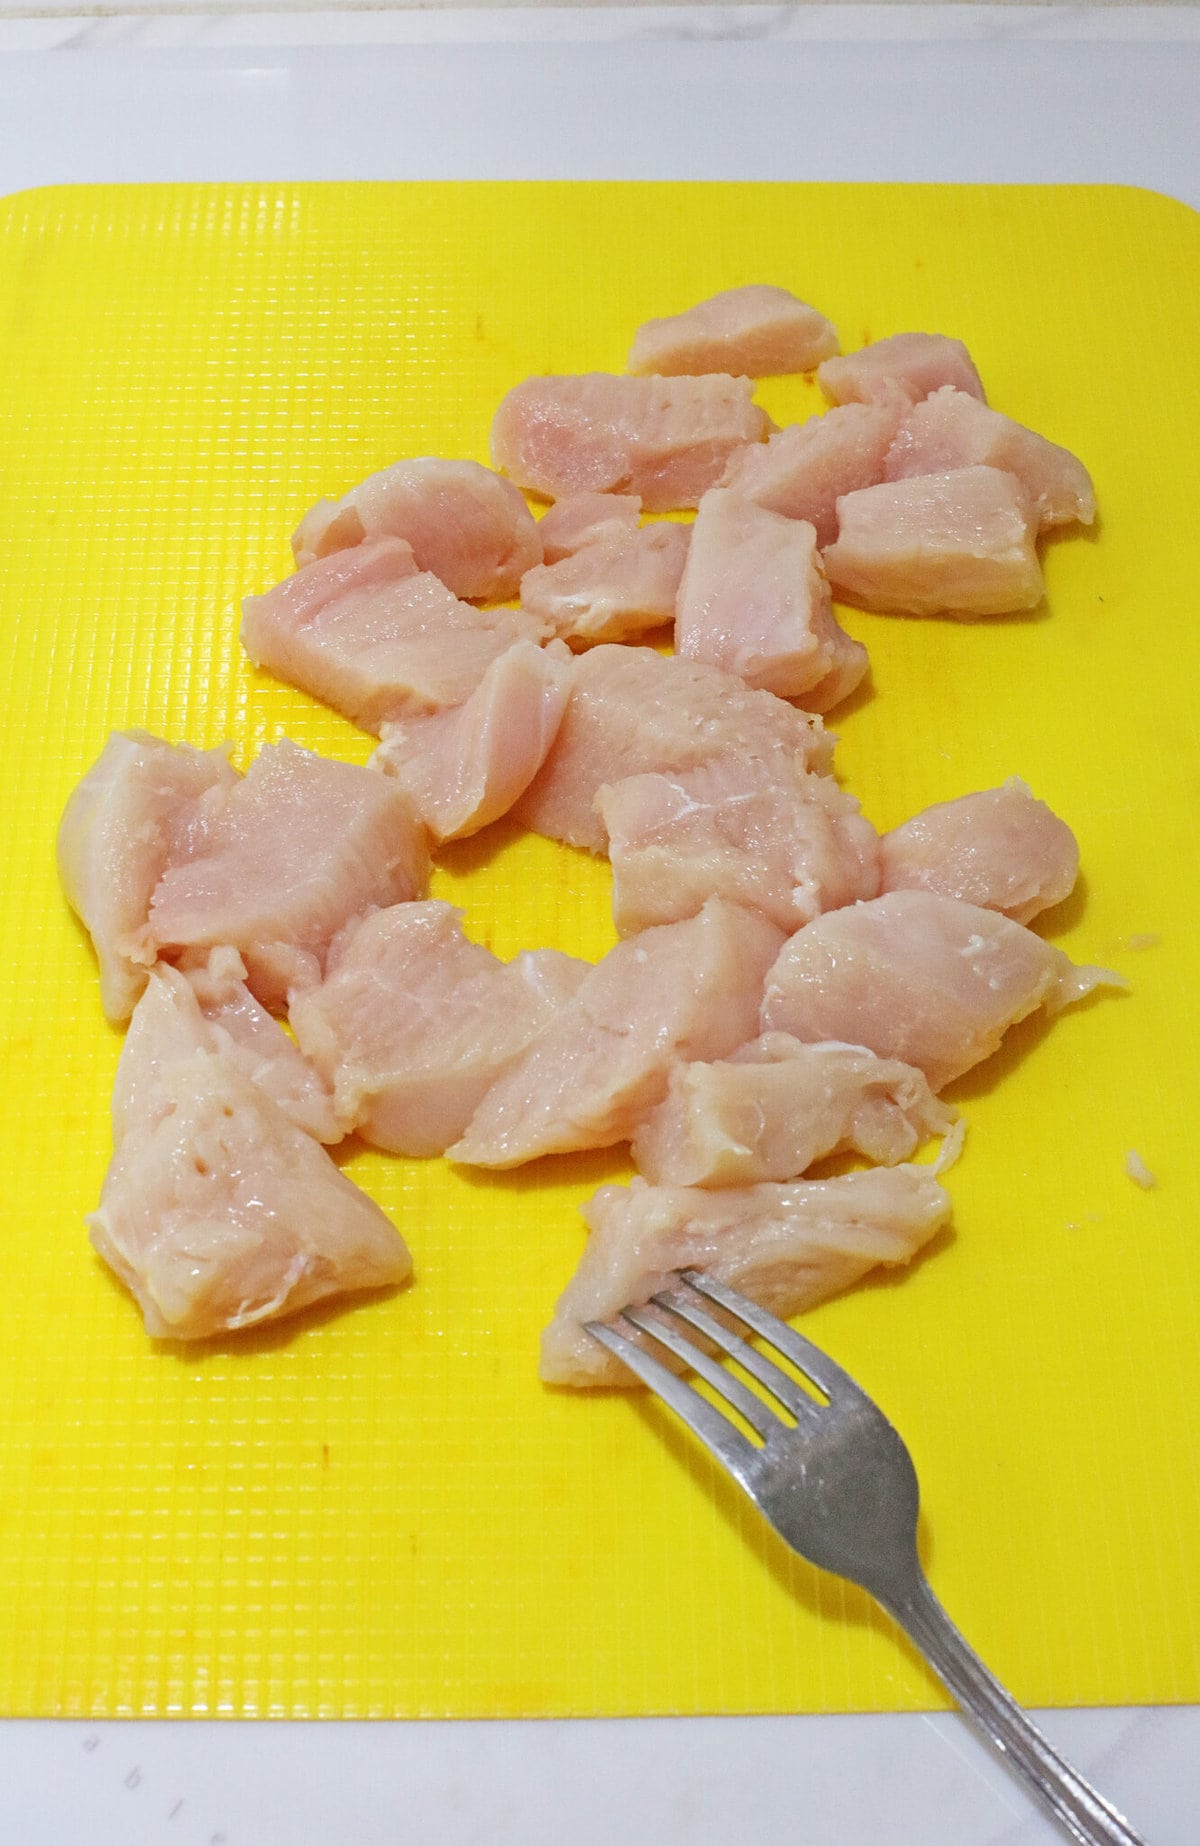 Cutting the chicken.